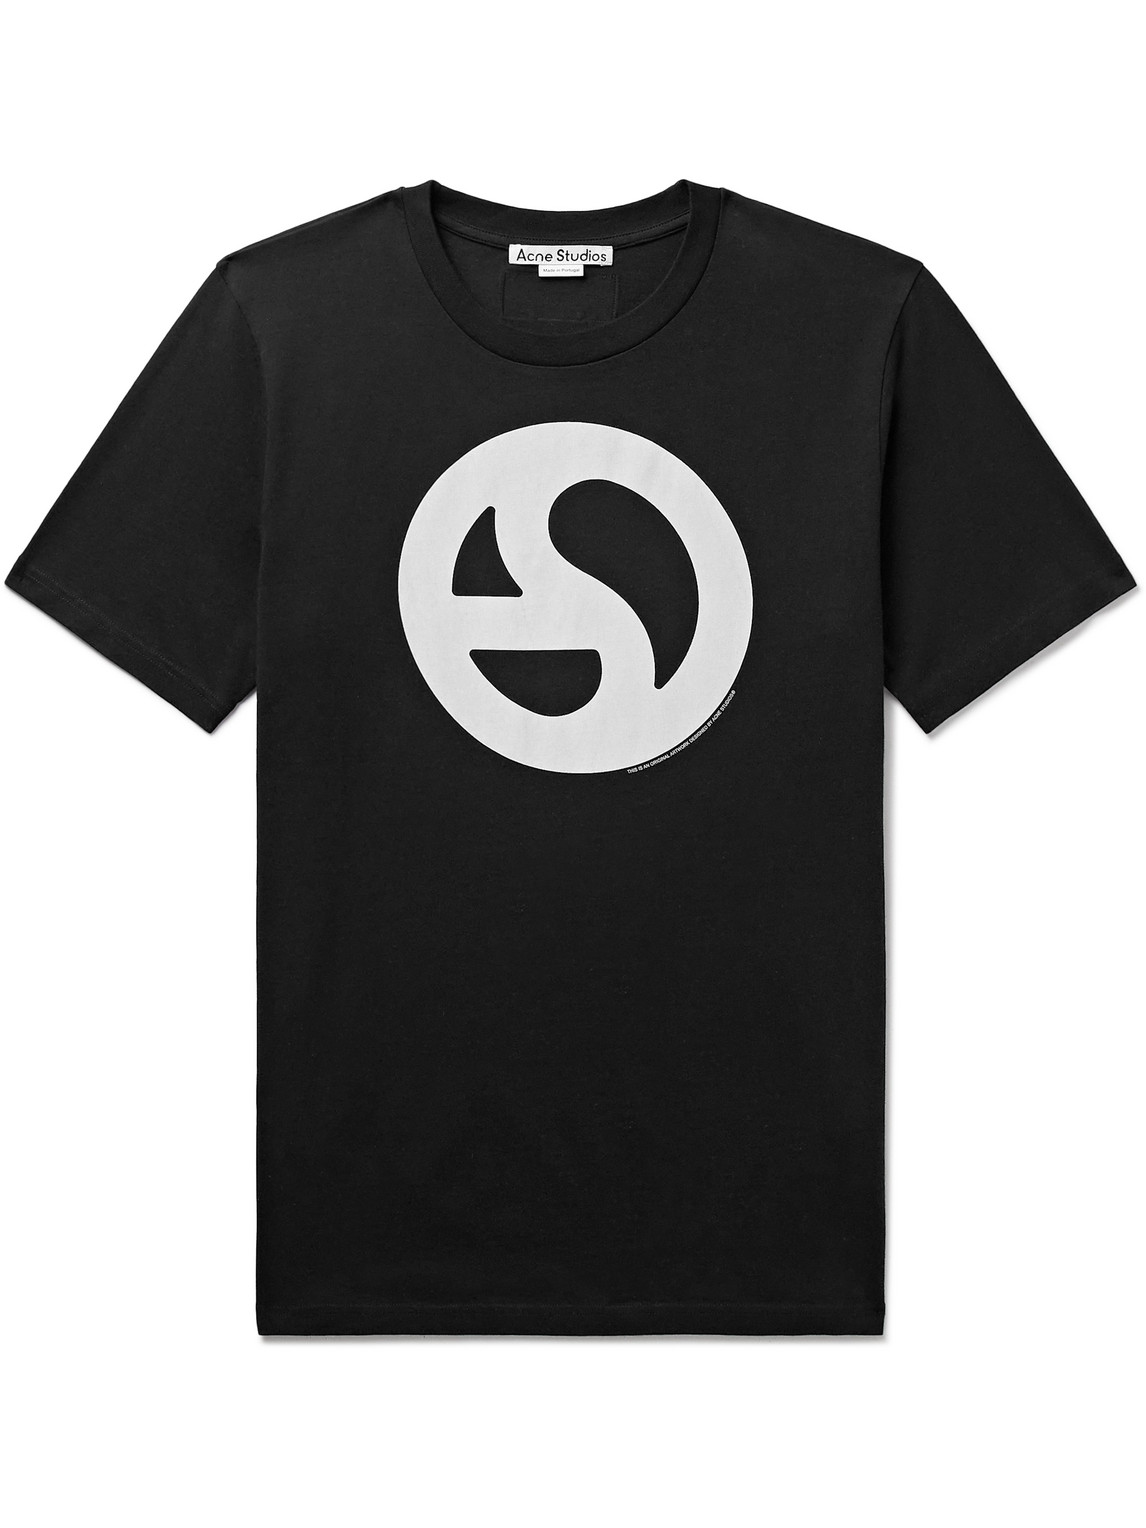 Acne Studios - Everest Logo-Print Cotton and Lyocell-Blend Jersey T-Shirt - Men - Black - XS von Acne Studios